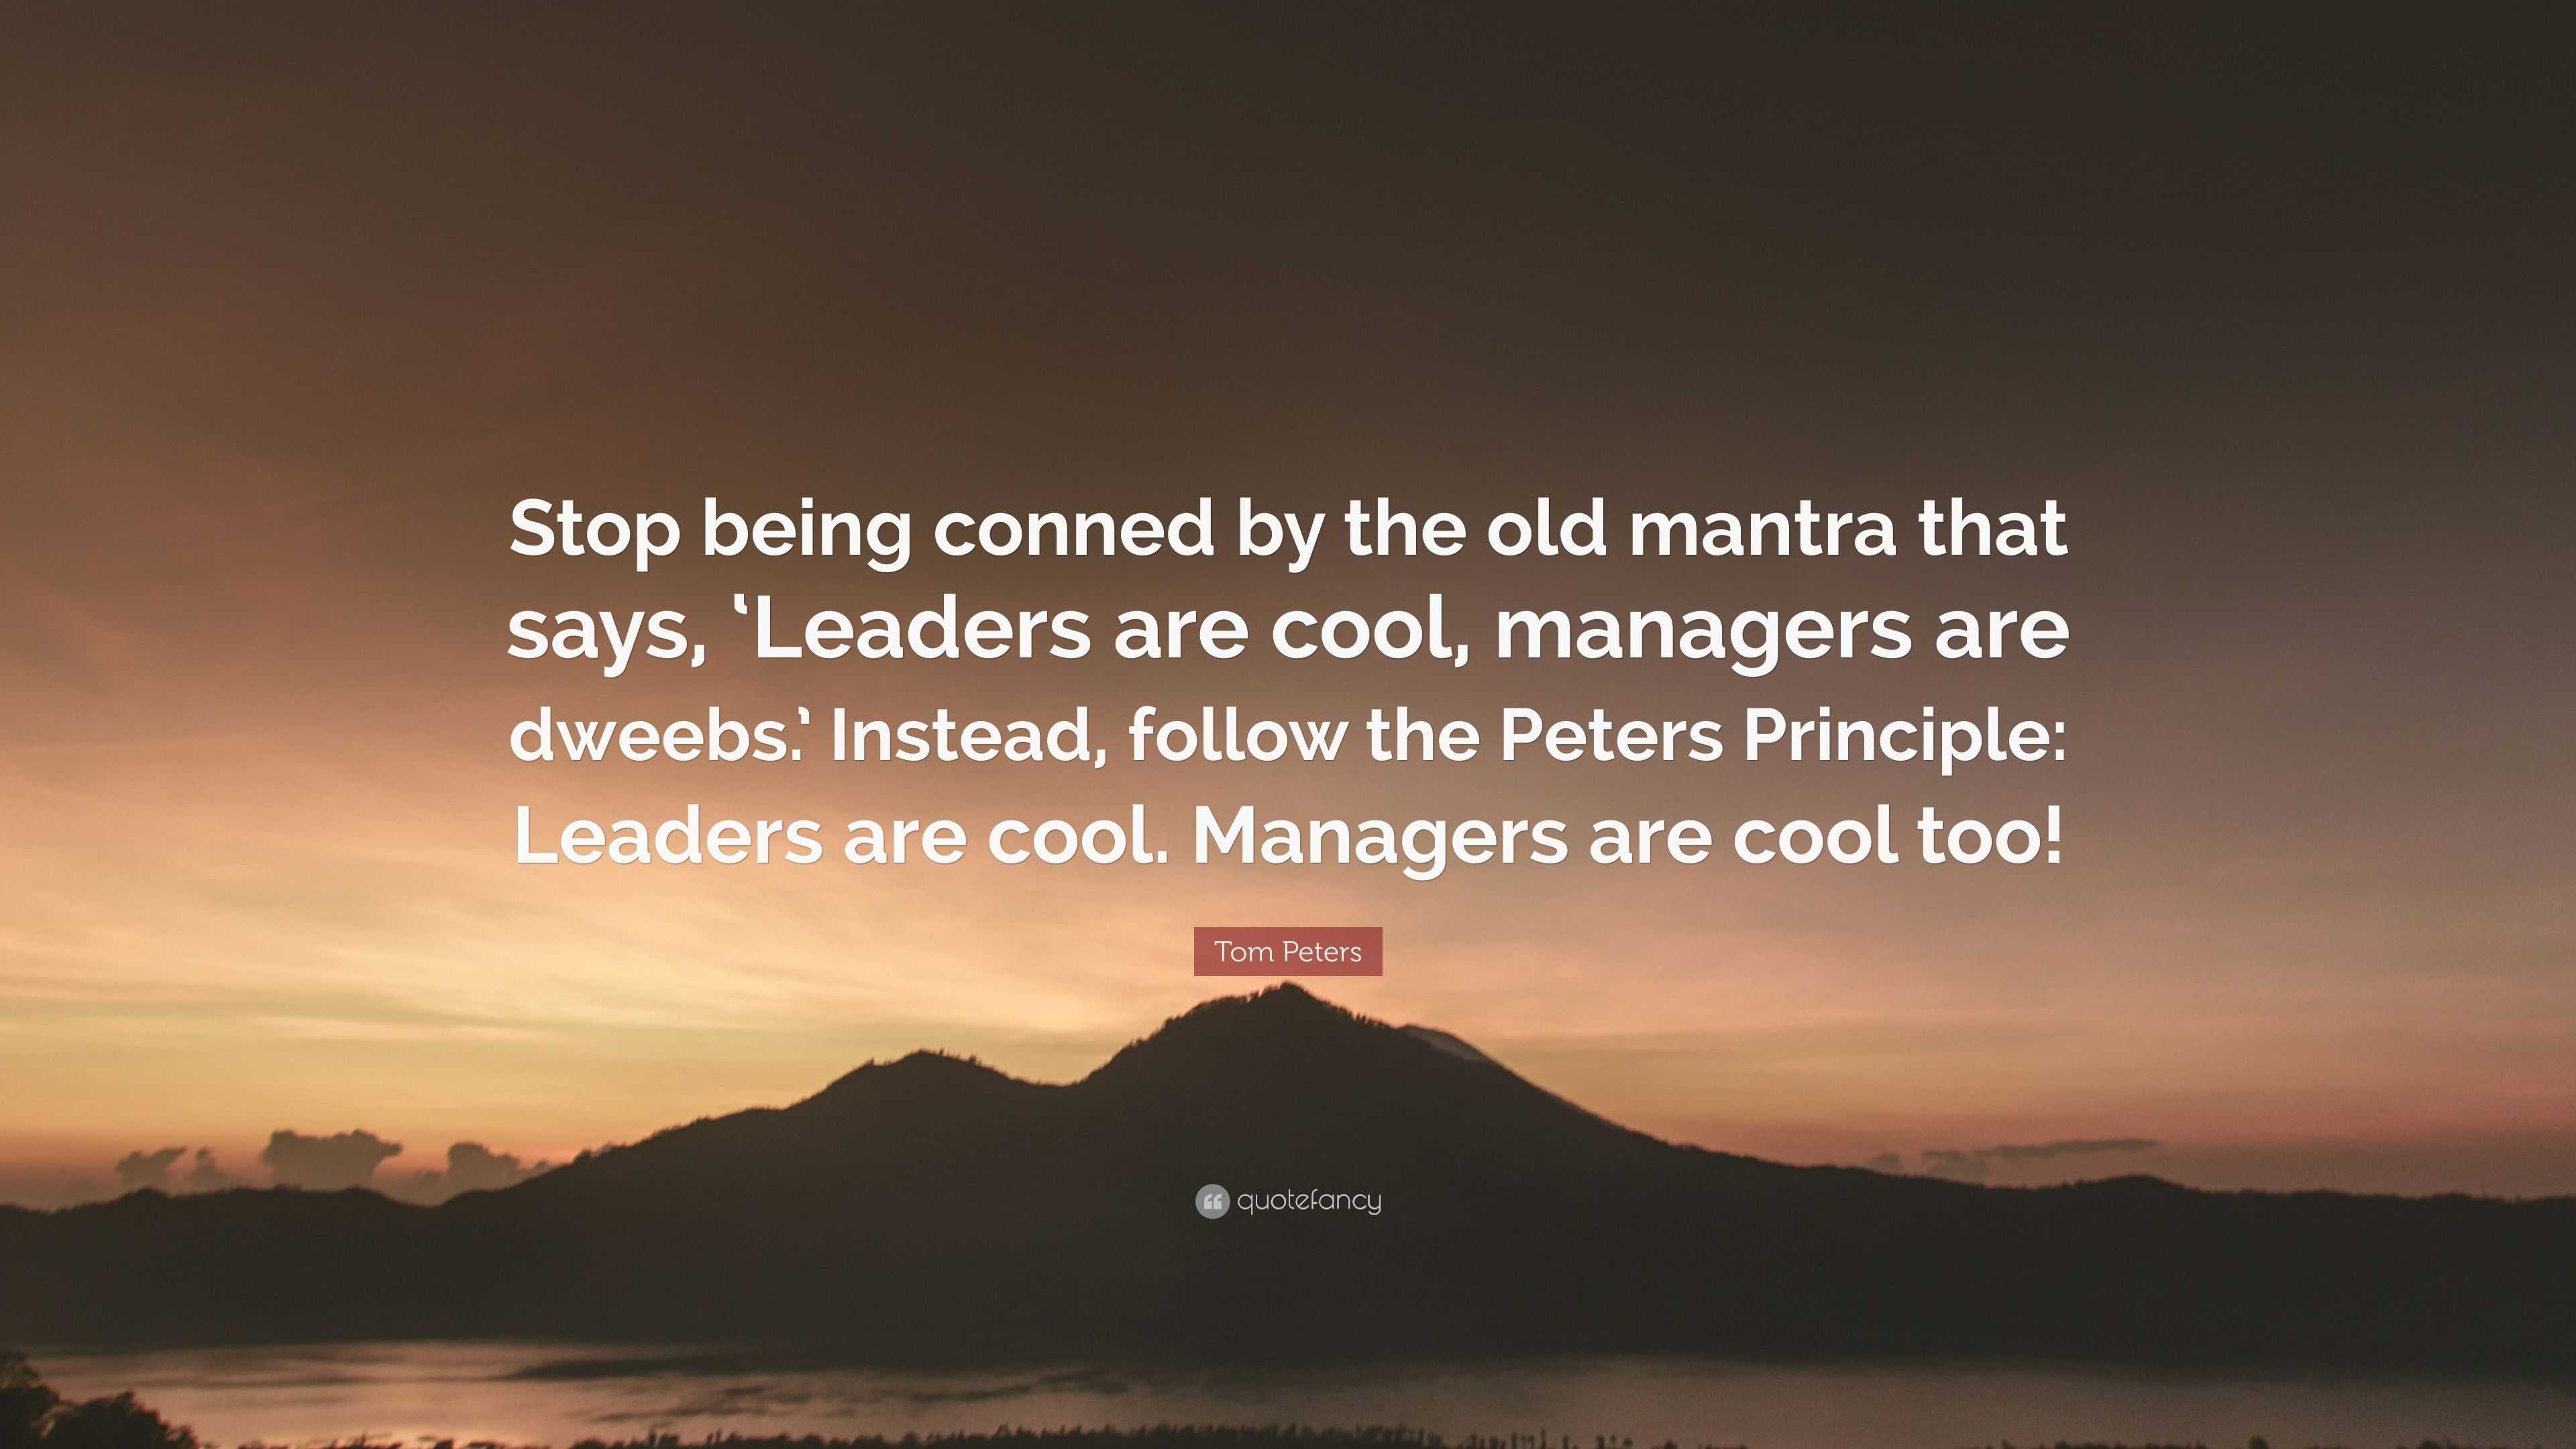 peters principle